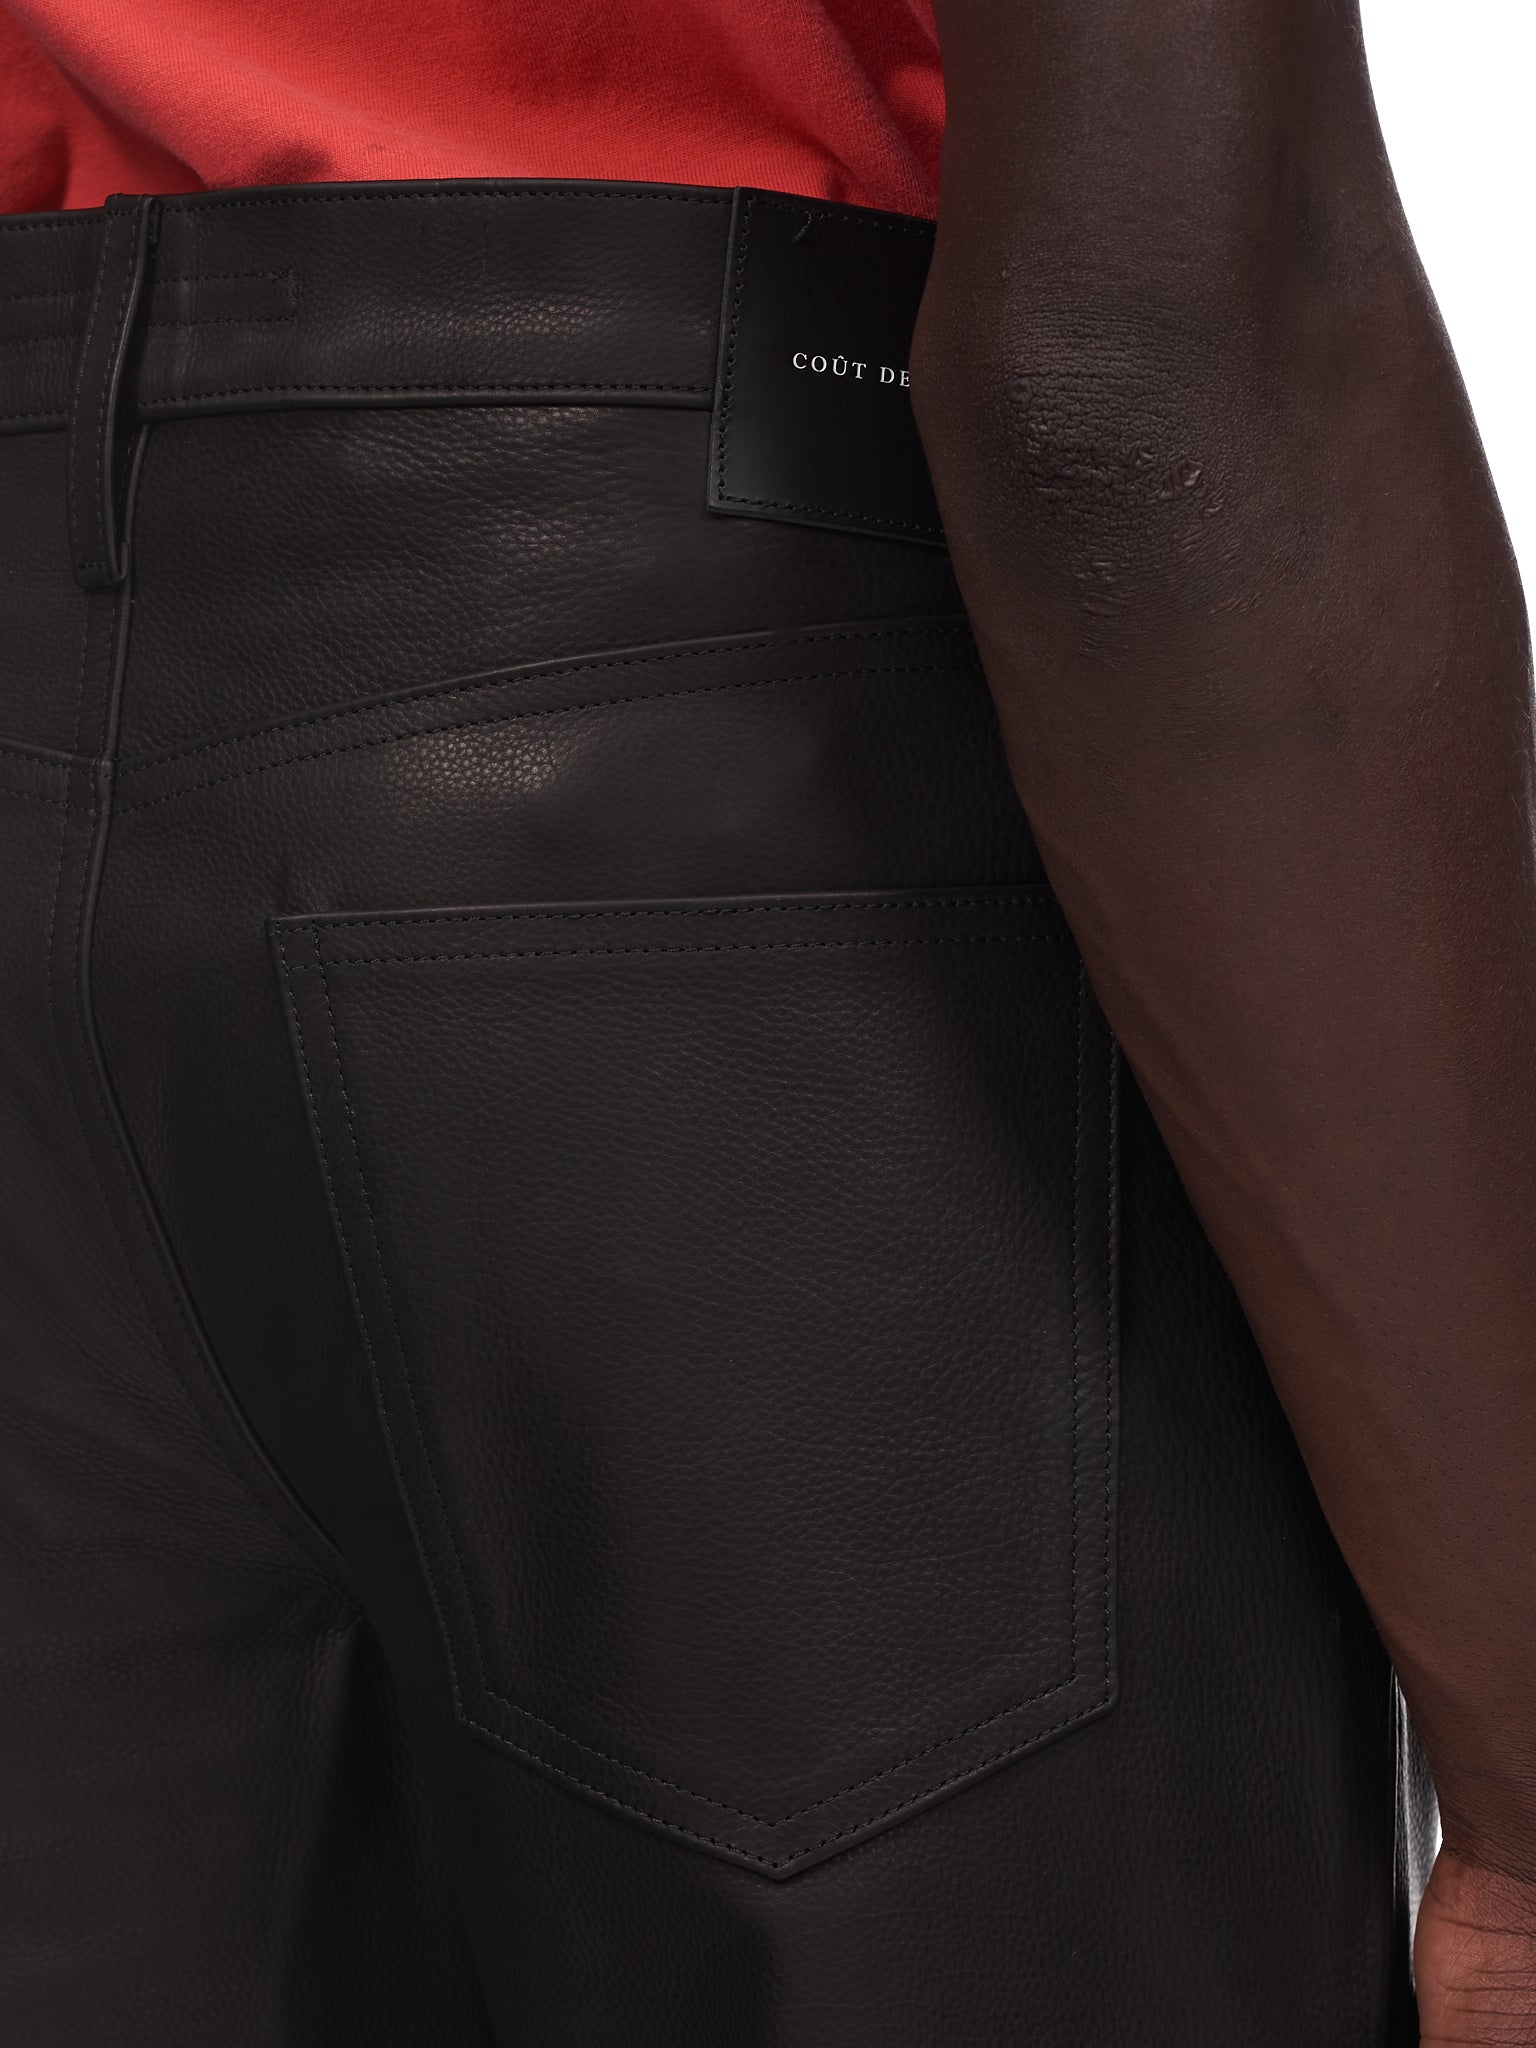 Coût De La Liberté Leather Trousers | H. Lorenzo - detail 2